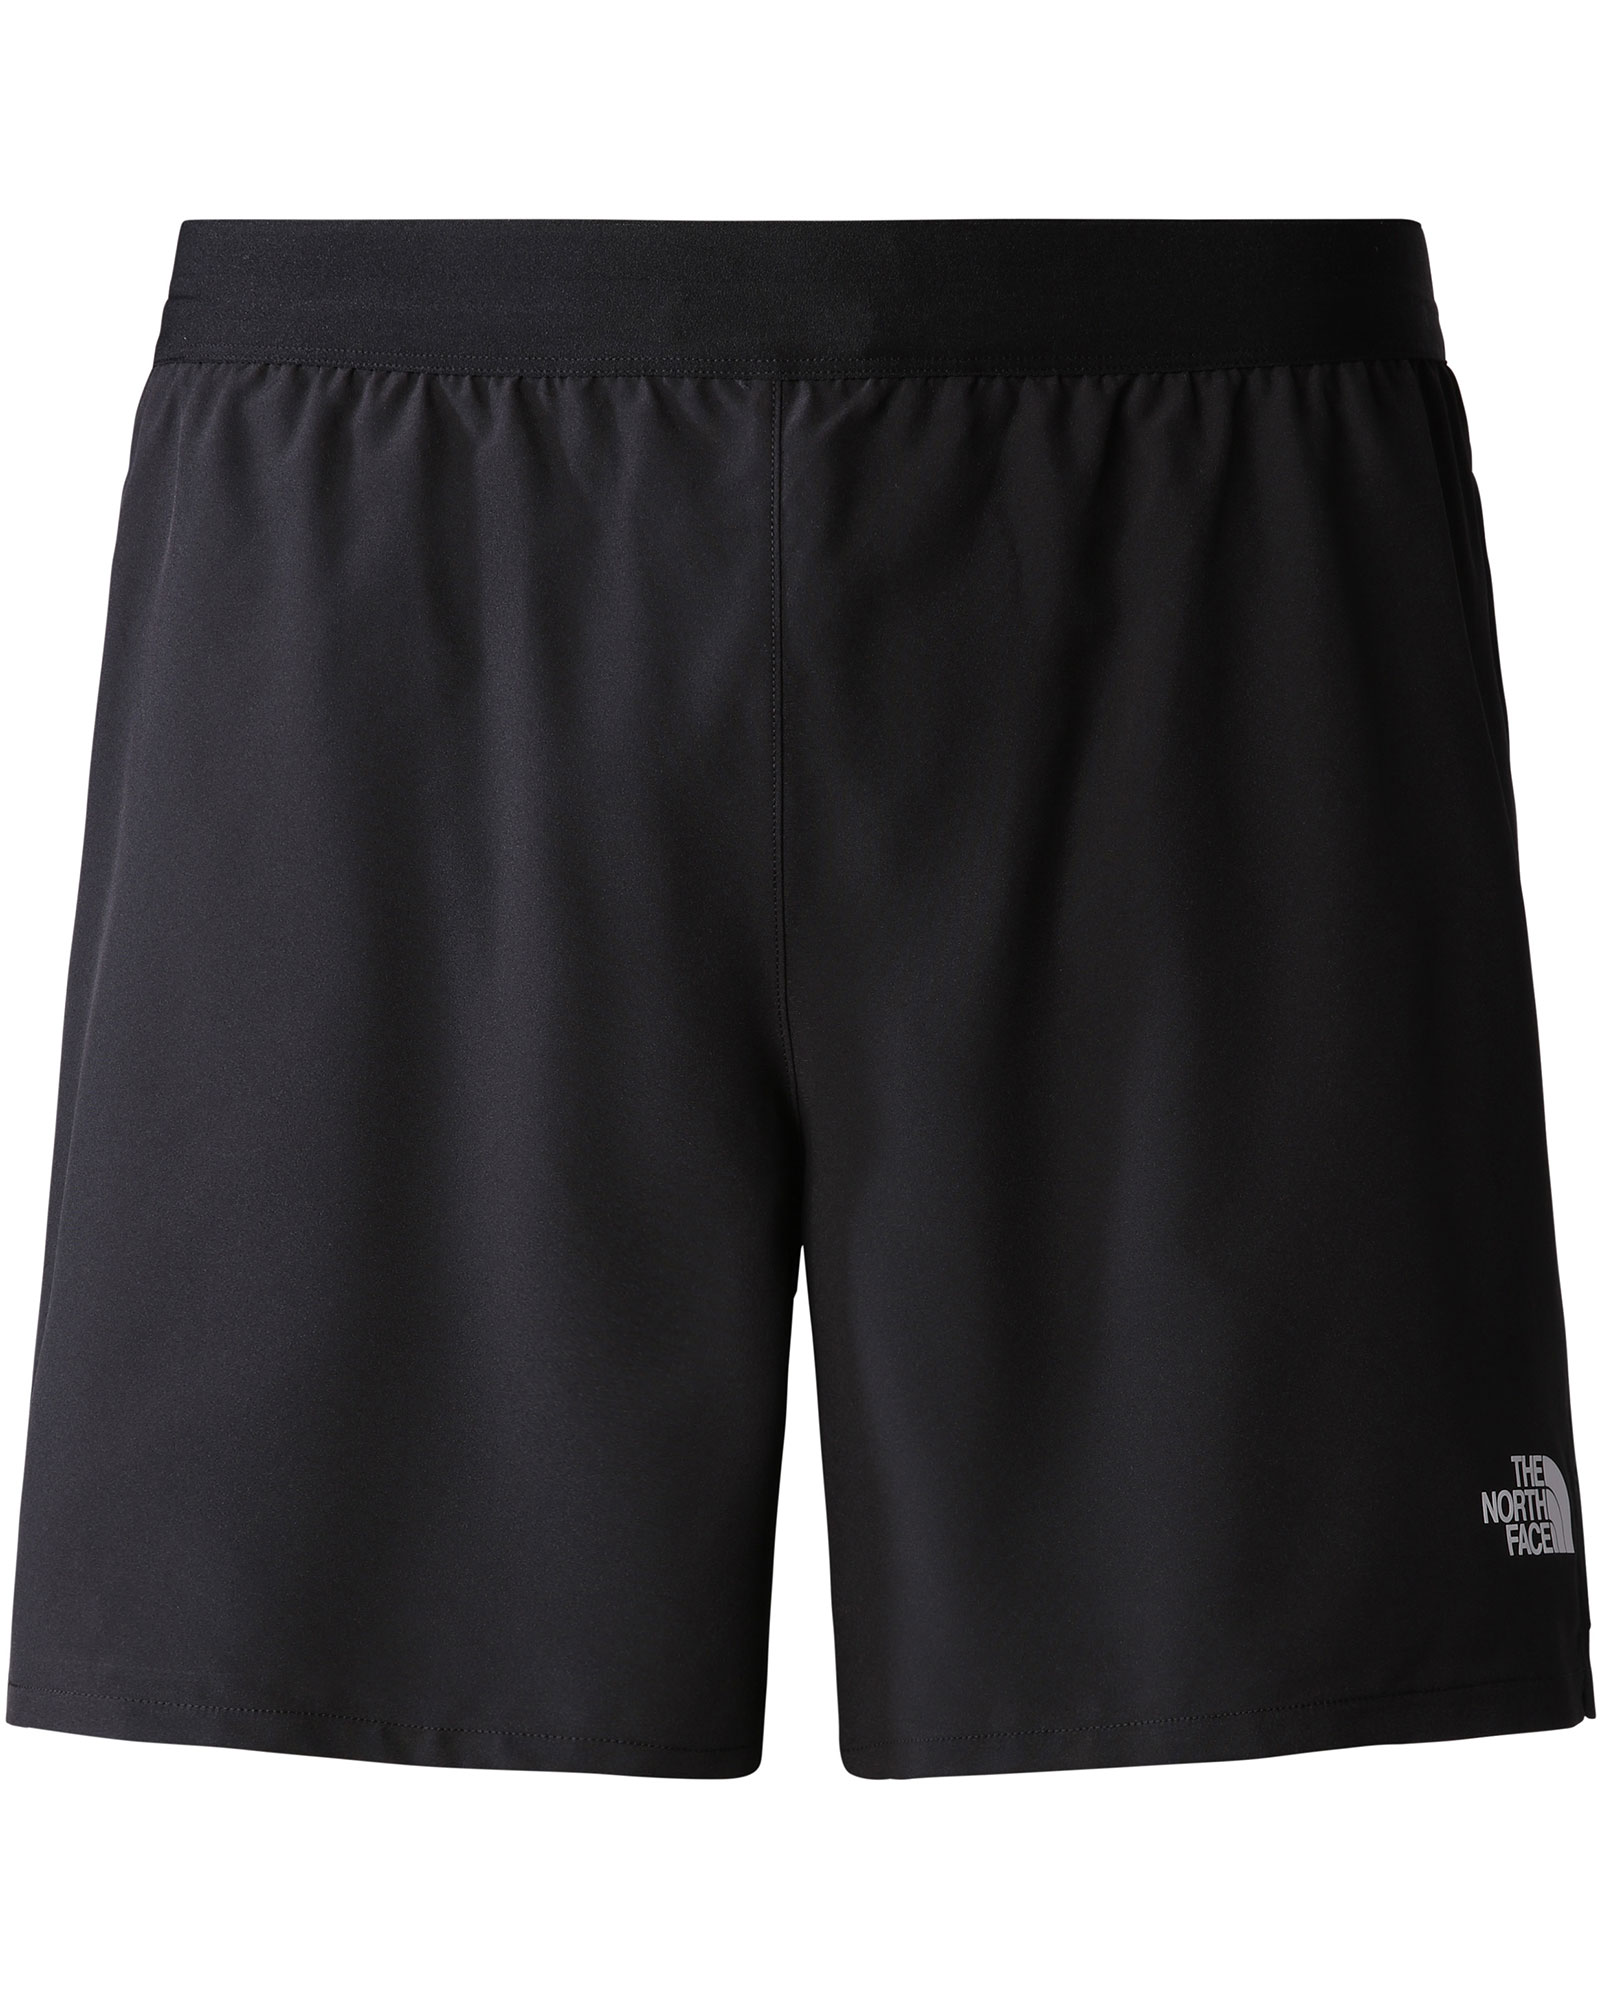 The North Face Men’s Sunriser 2 in 1 Shorts - TNF Black L